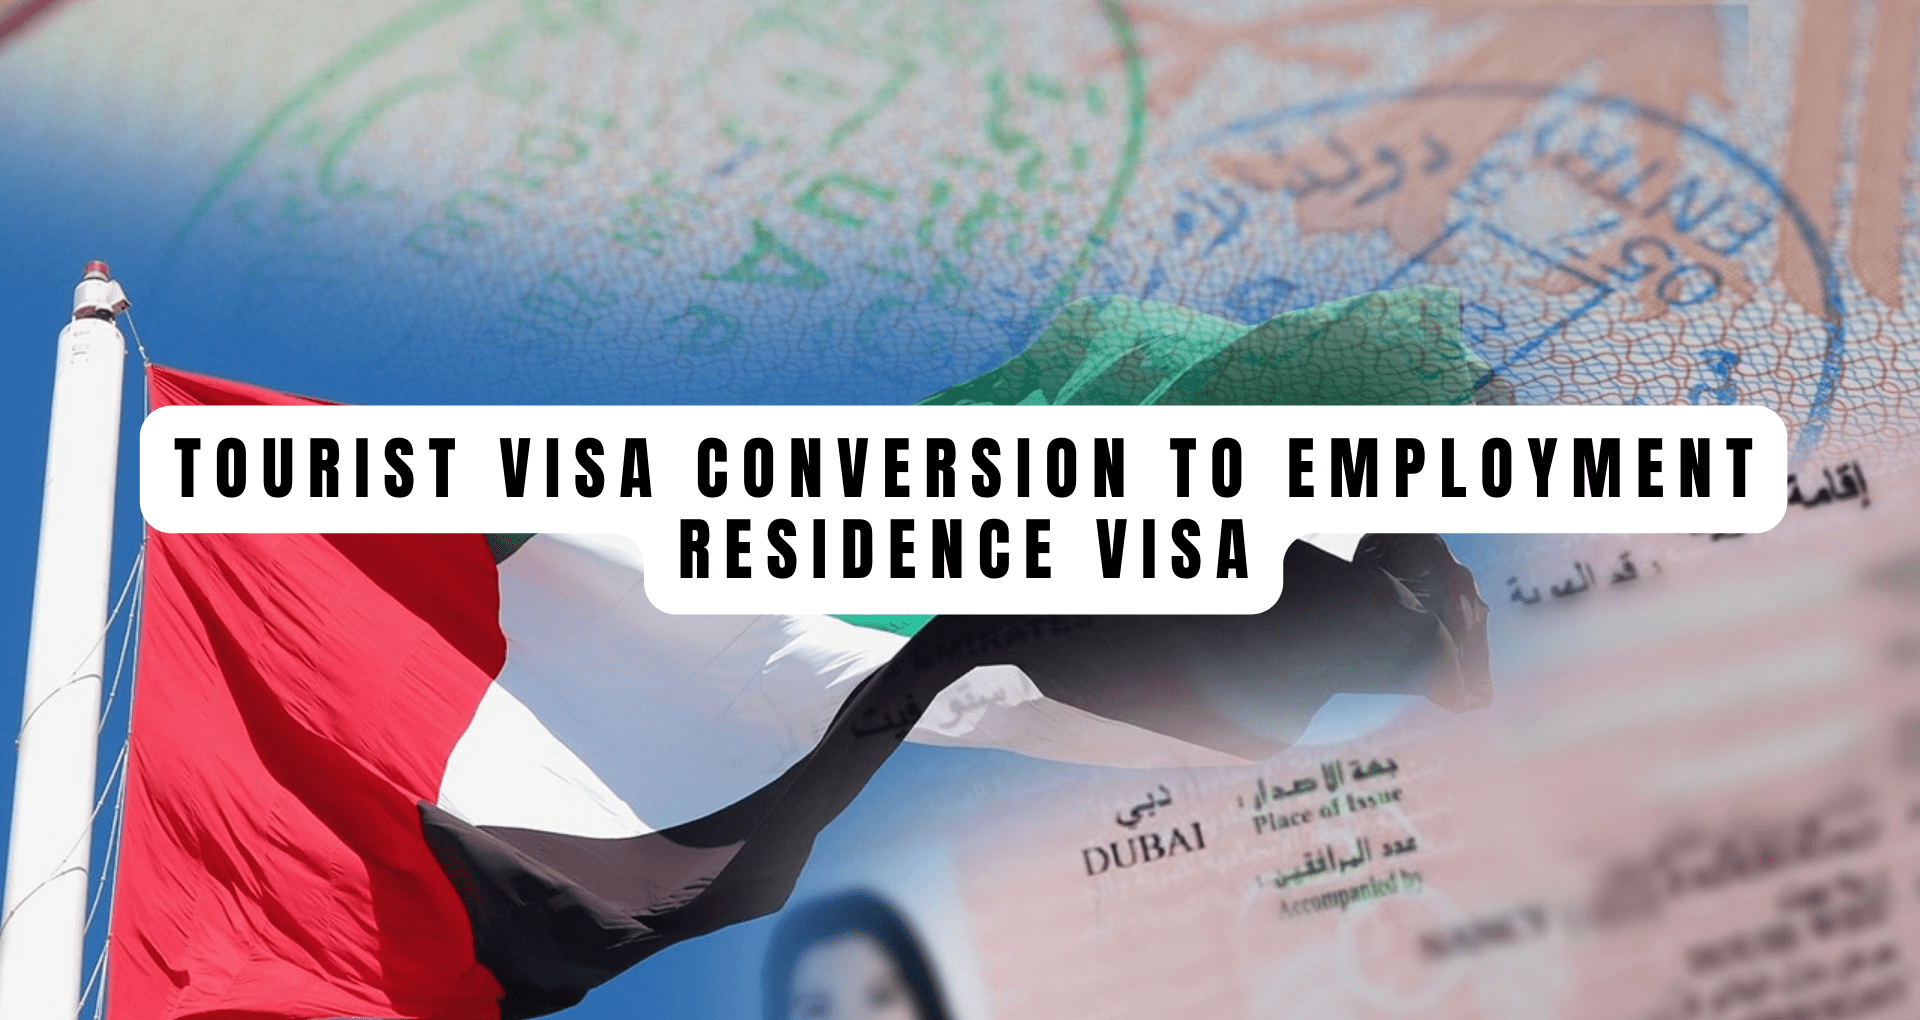 Tourist visa conversion to employment residence visa